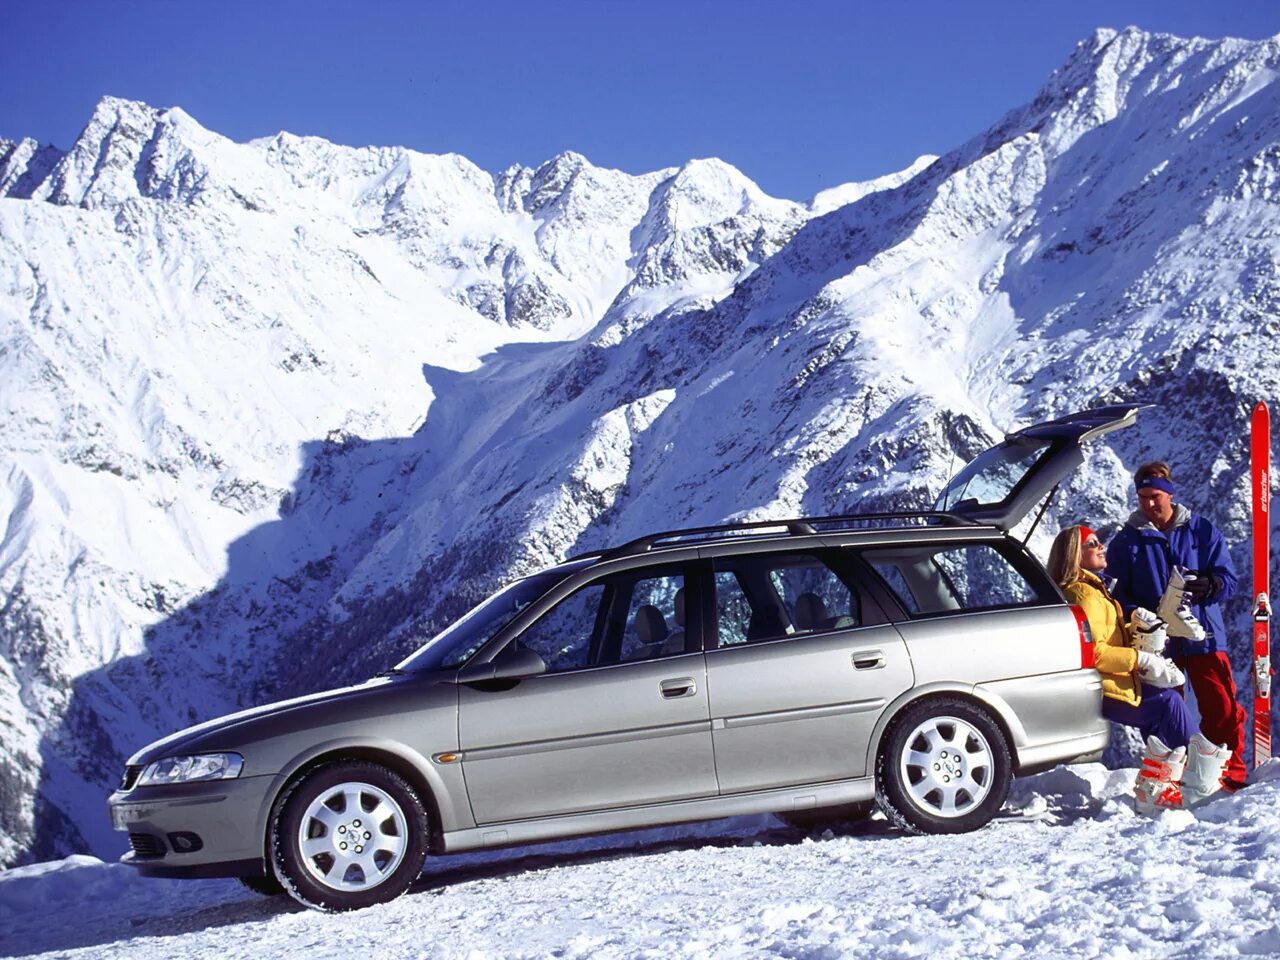 Opel Vectra универсал 1999. Opel Vectra b Caravan. Opel Vectra b универсал. Опель Вектра 1999 универсал. Опель 1999 универсал